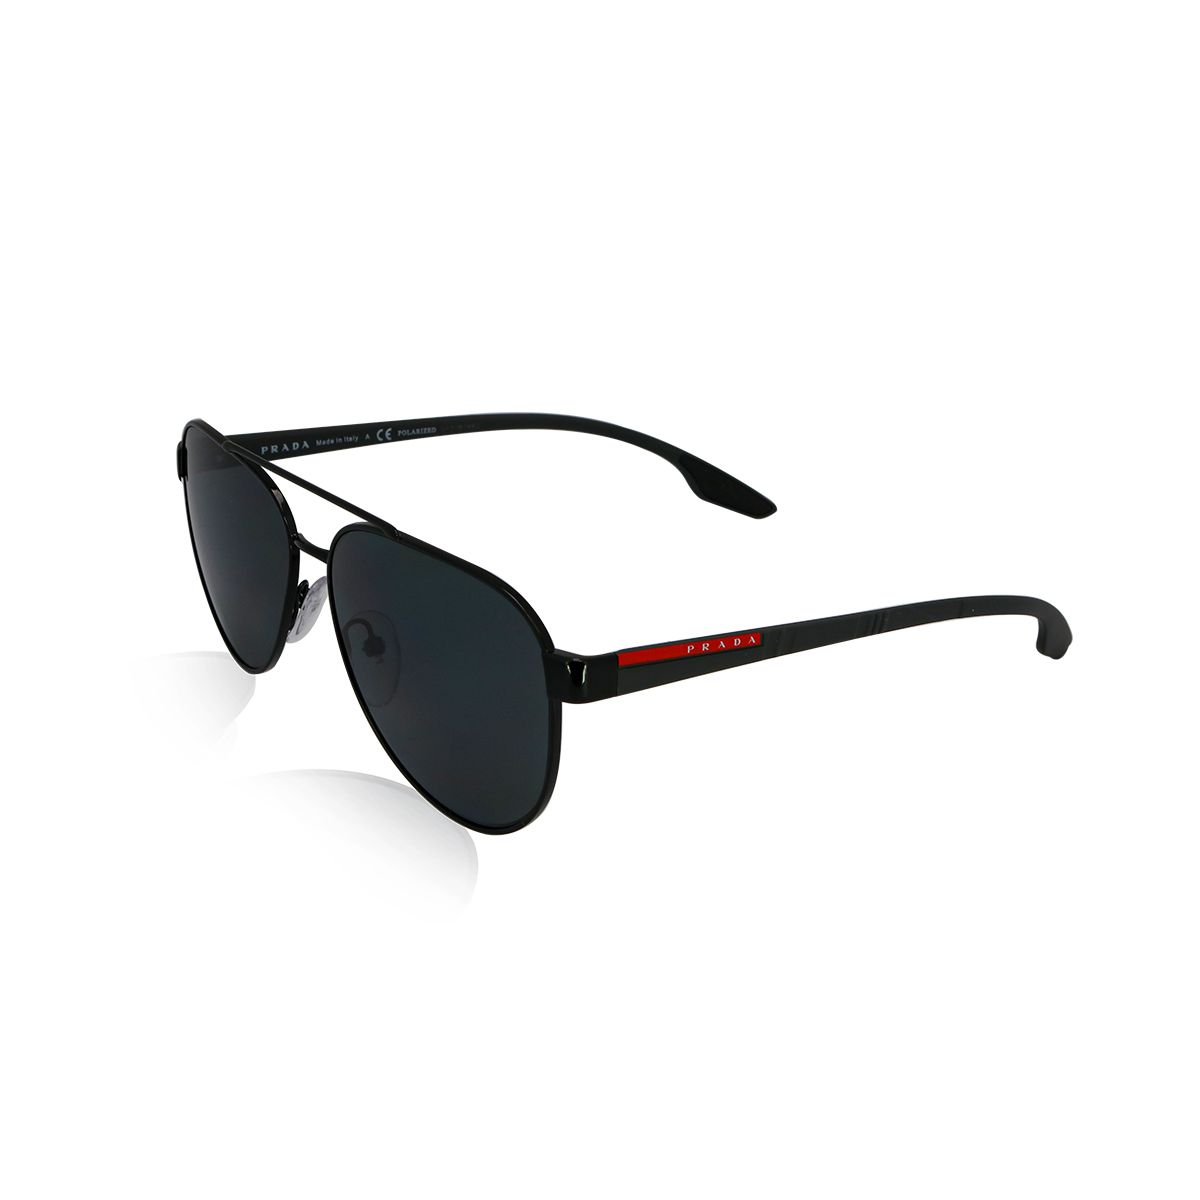 PS54TS Pilot Sunglasses 1AB5Z1 - size 58